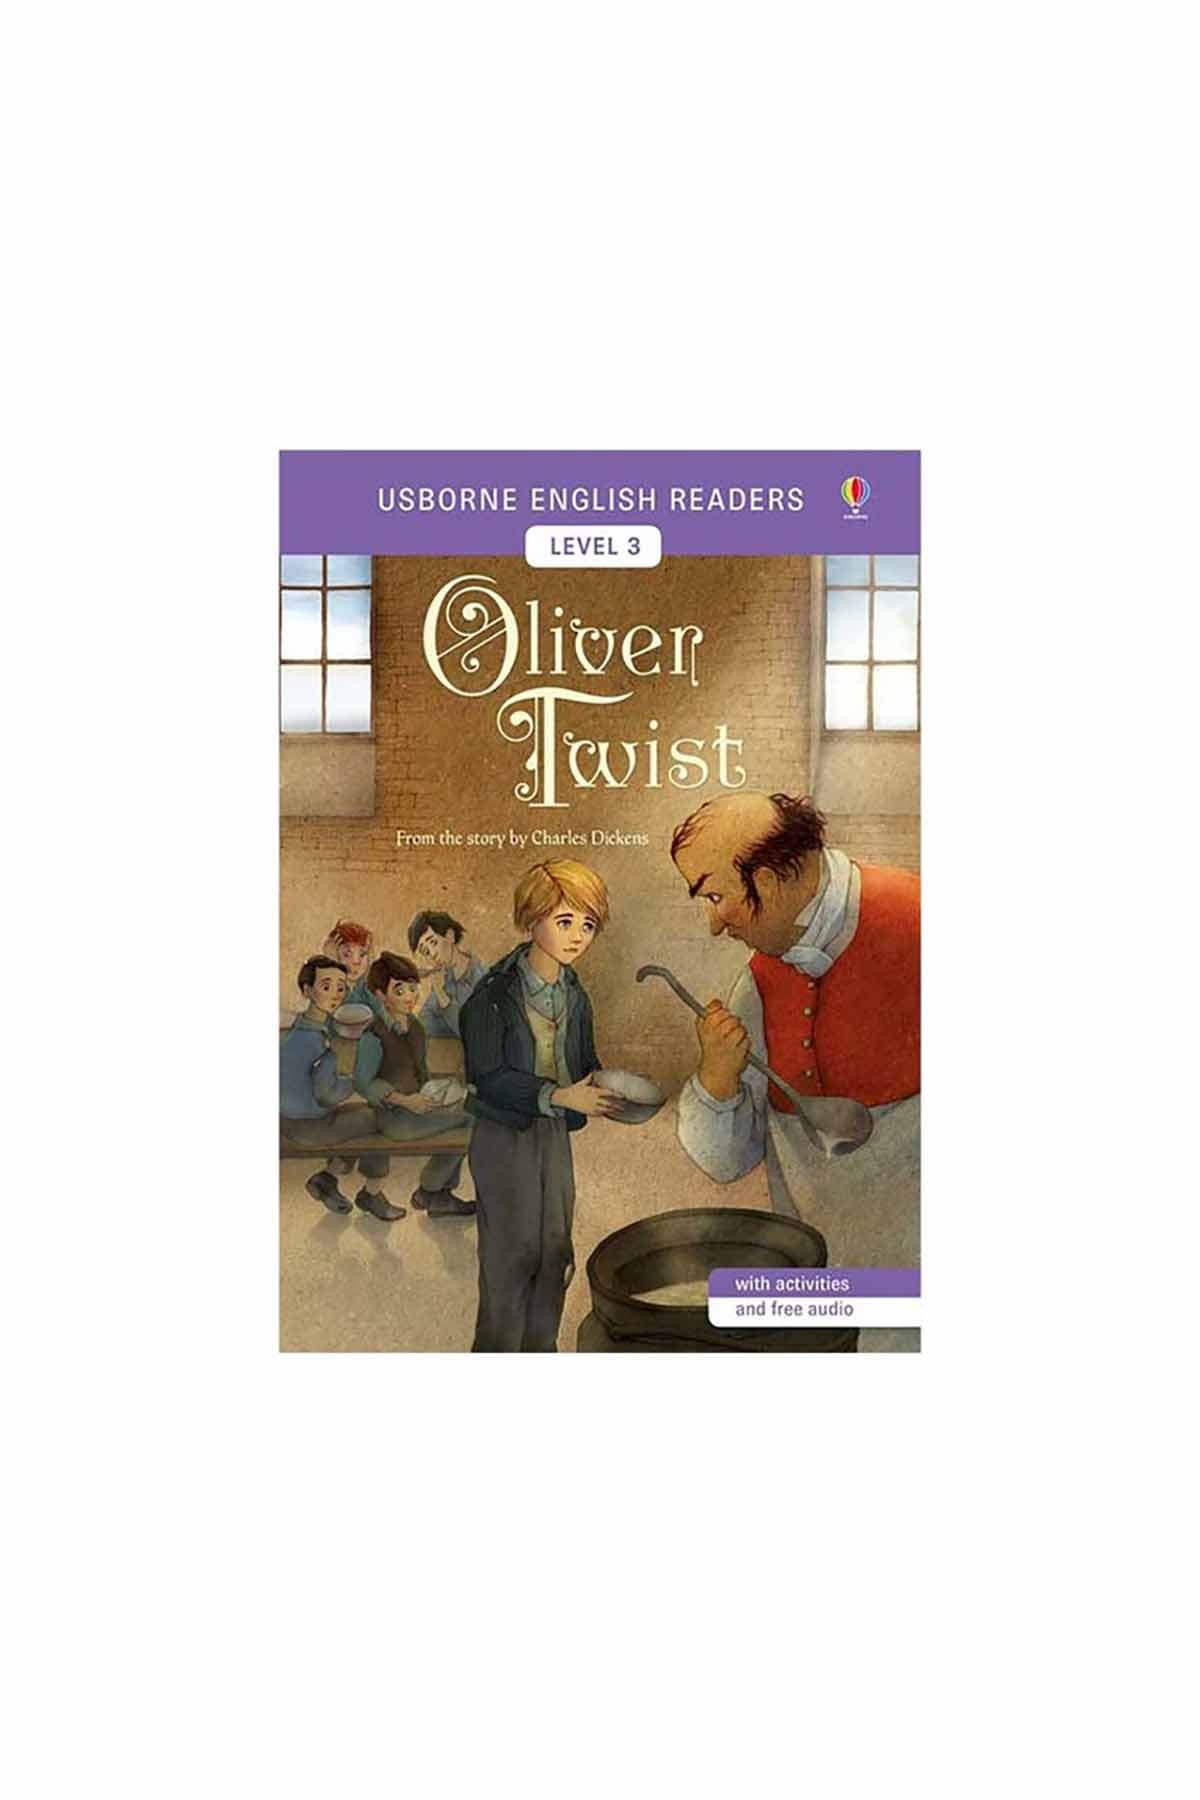 The Usborne Oliver Twist